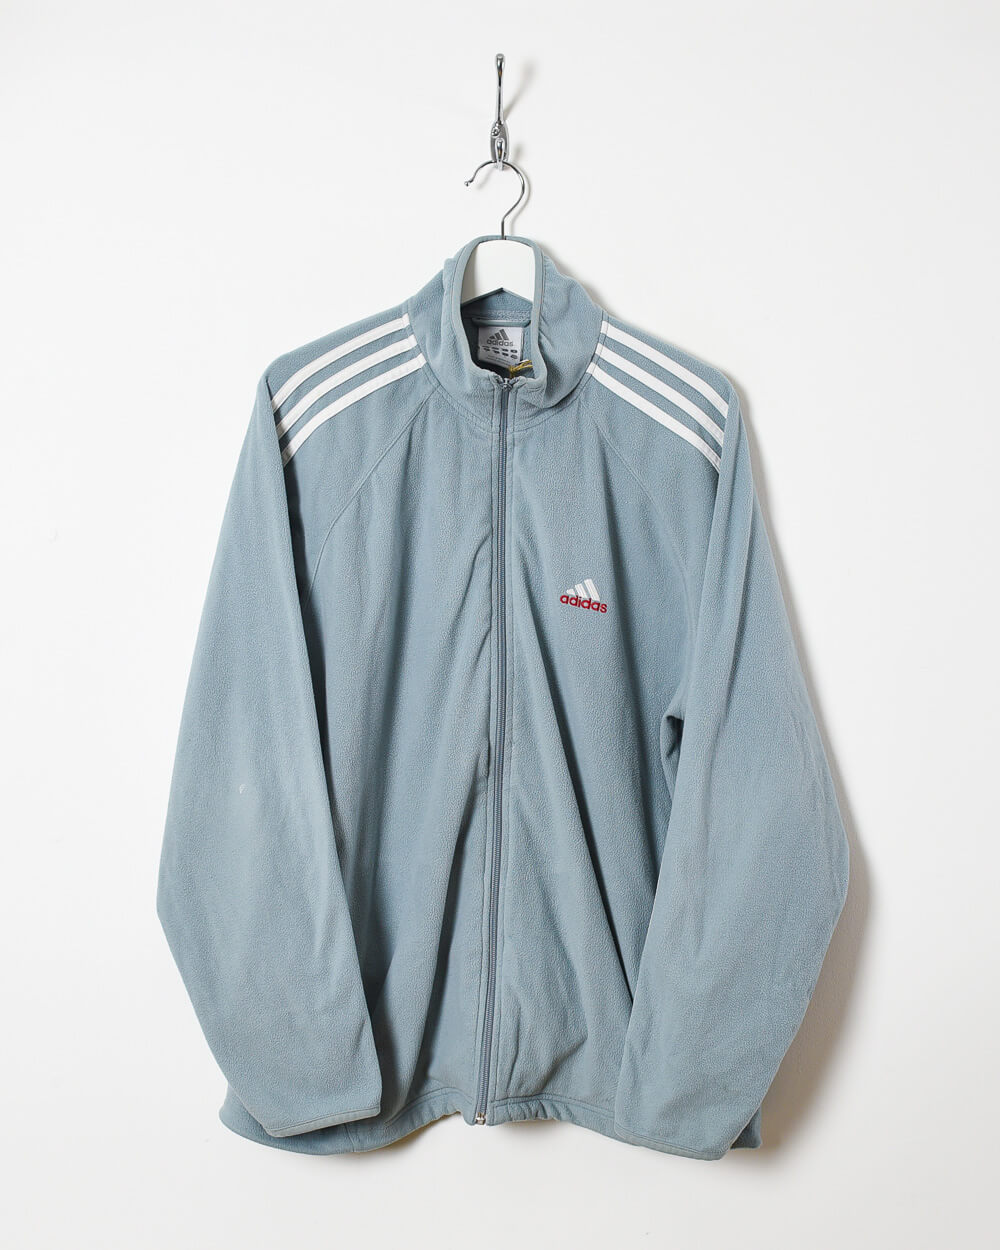 Stone Adidas Zip-Through Fleece - Medium